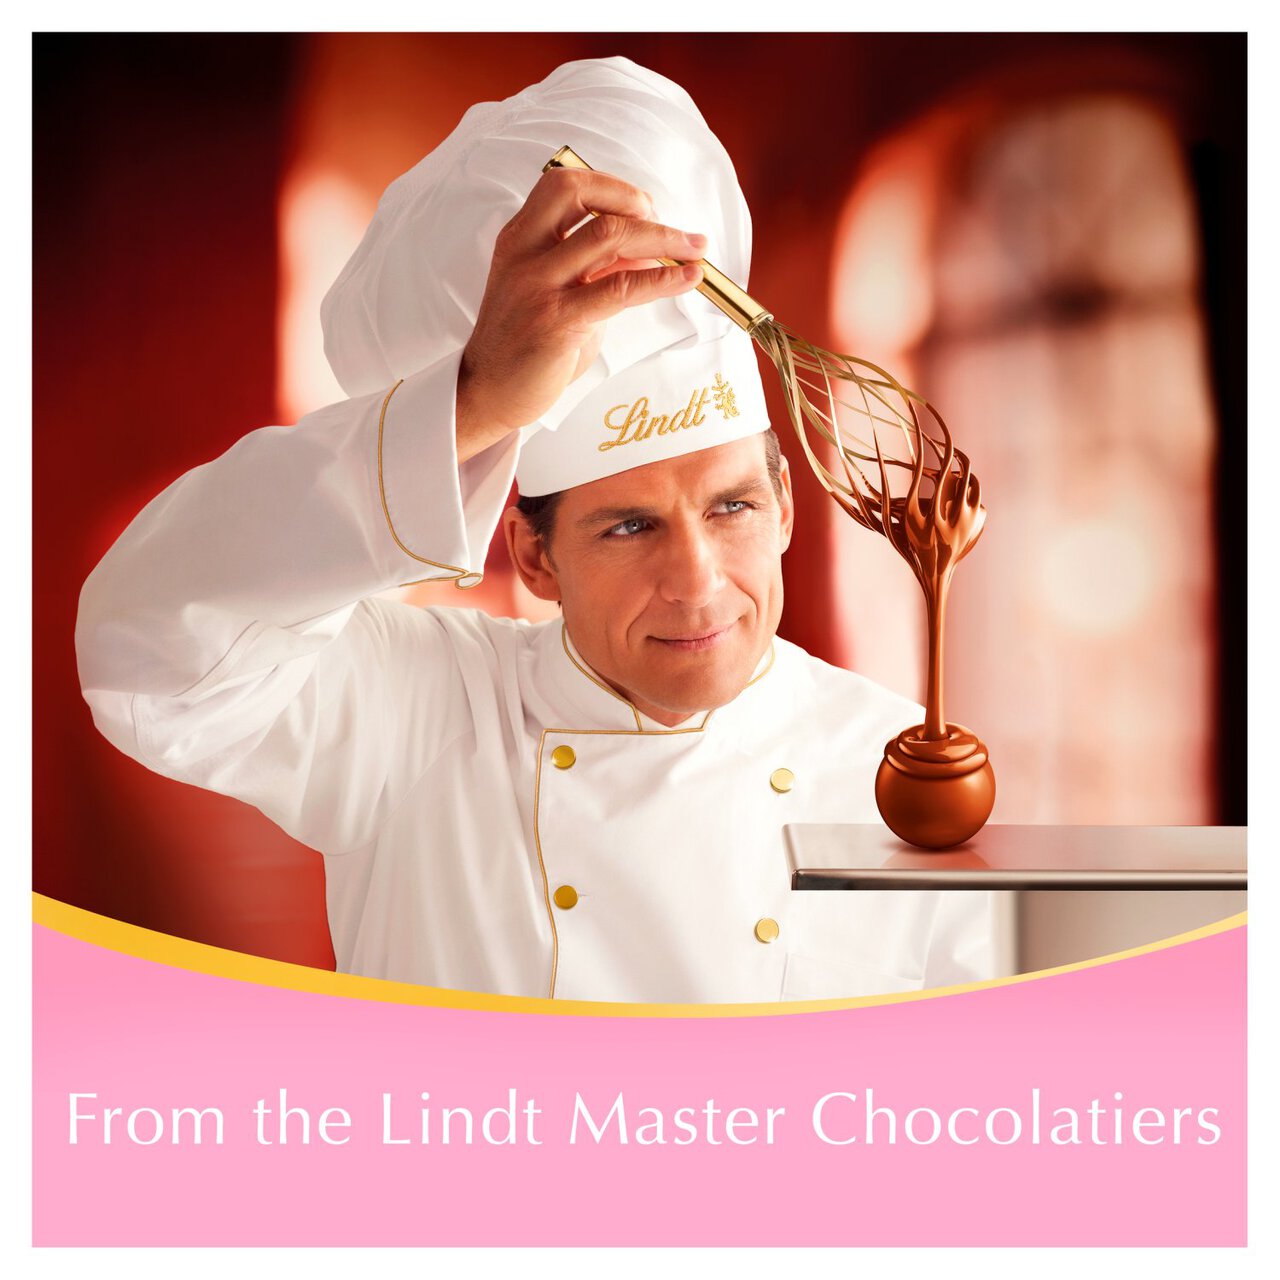 Lindt Lindor Strawberries & Cream Chocolate Truffles 200g